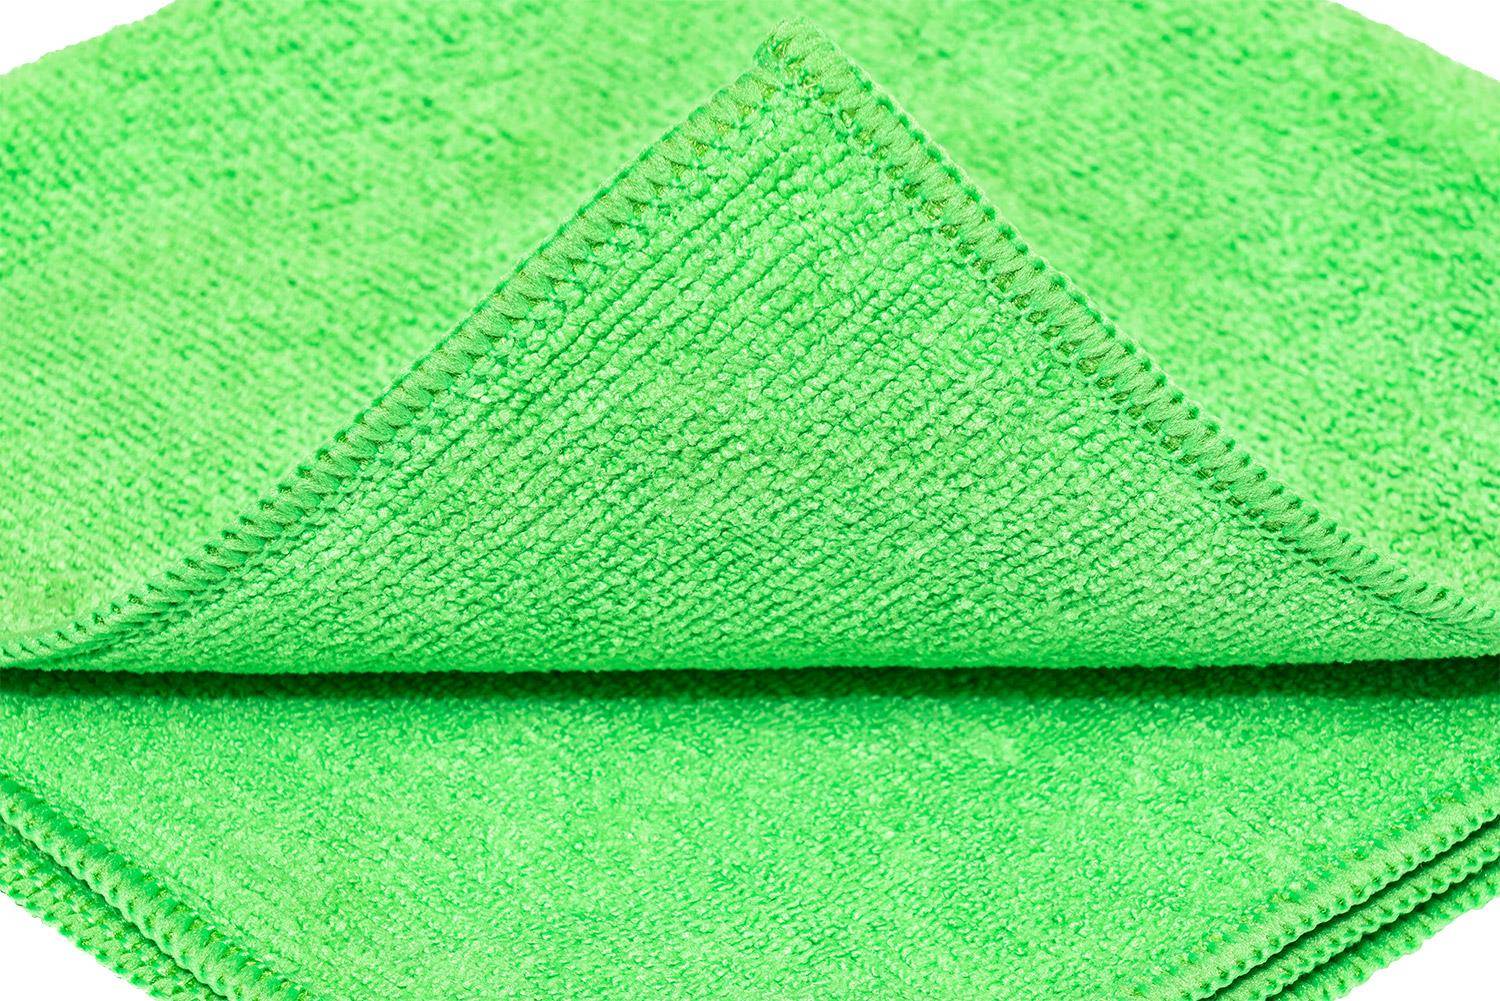 Microfasertuch grün, 5er Pack